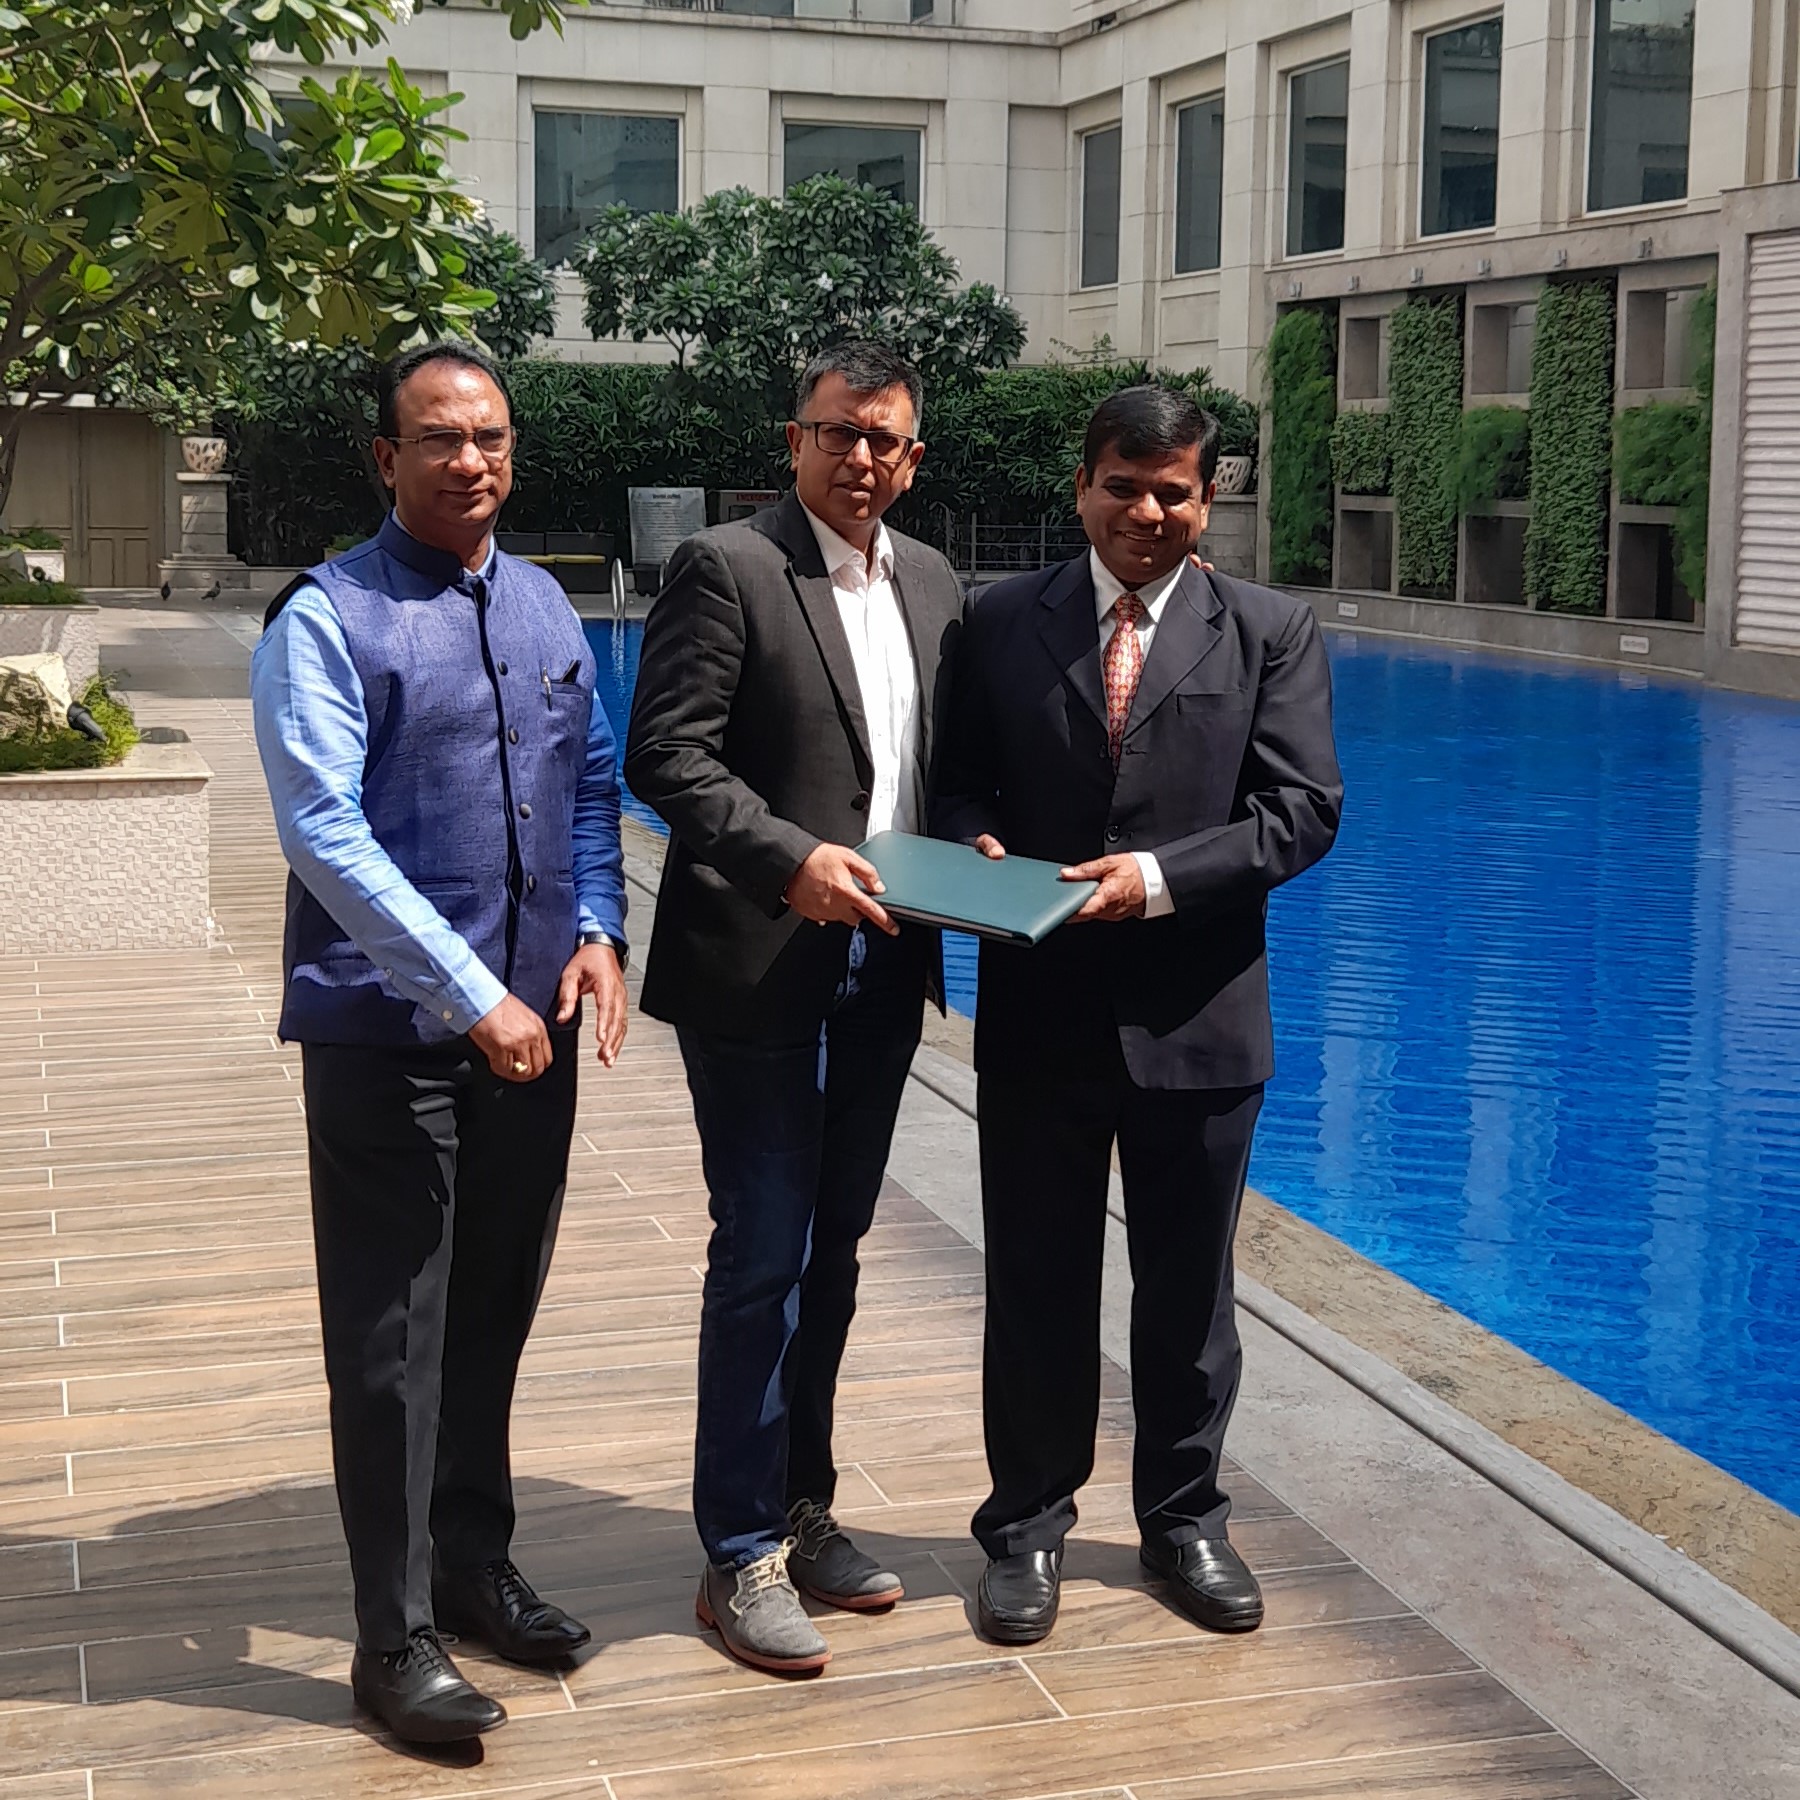 Lemon Tree Hotels signs a new hotel in Erode, Tamil Nadu